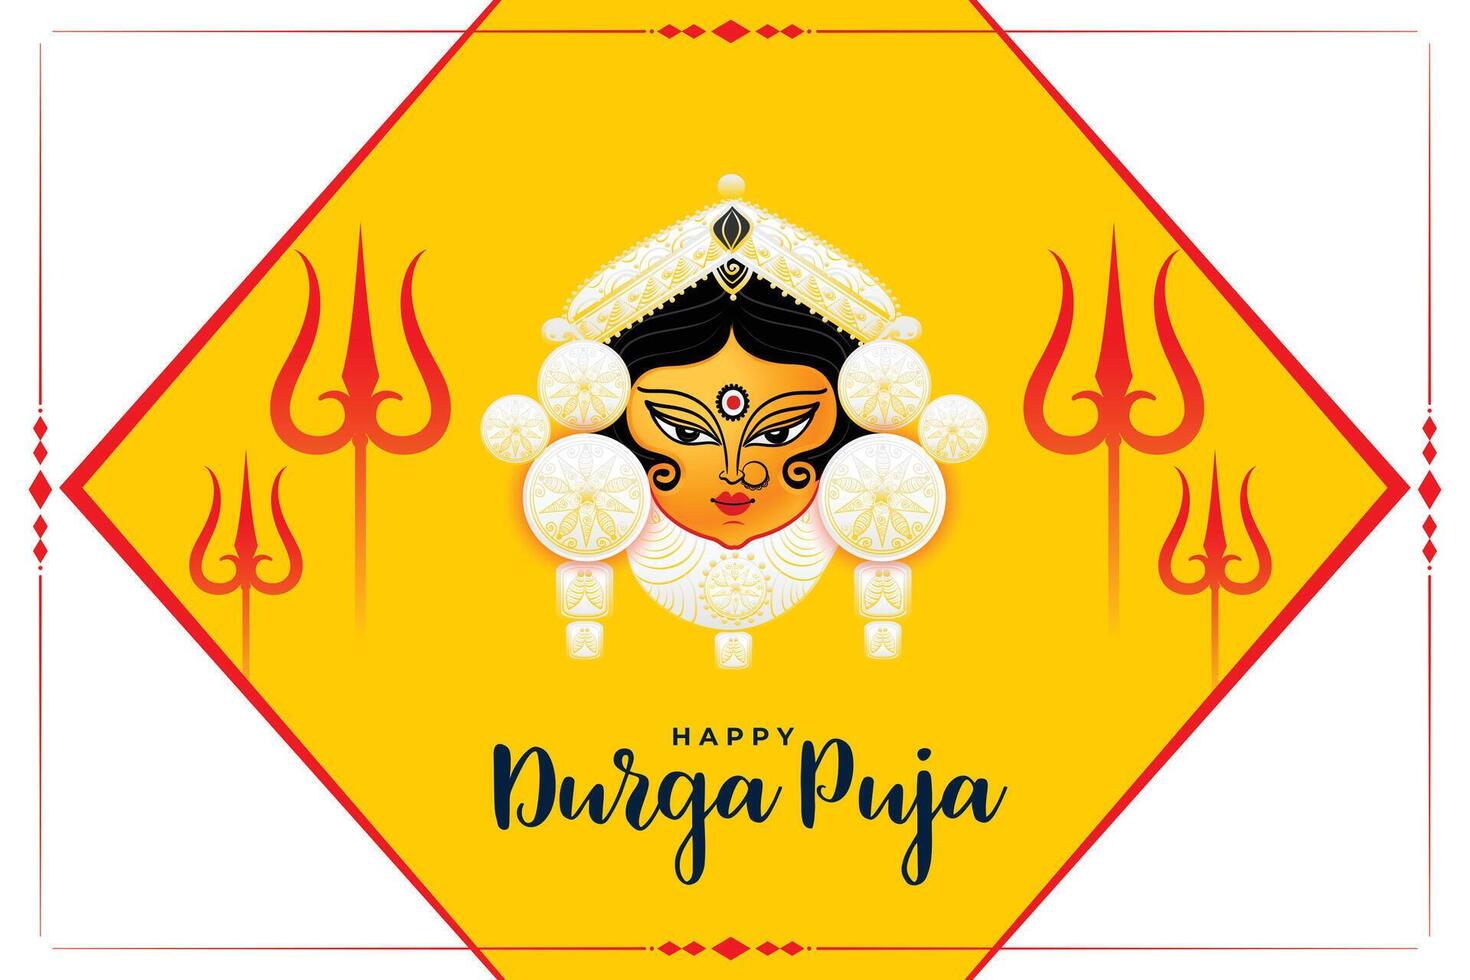 glücklich Durga pooja navratri Festival Hintergrund vektor